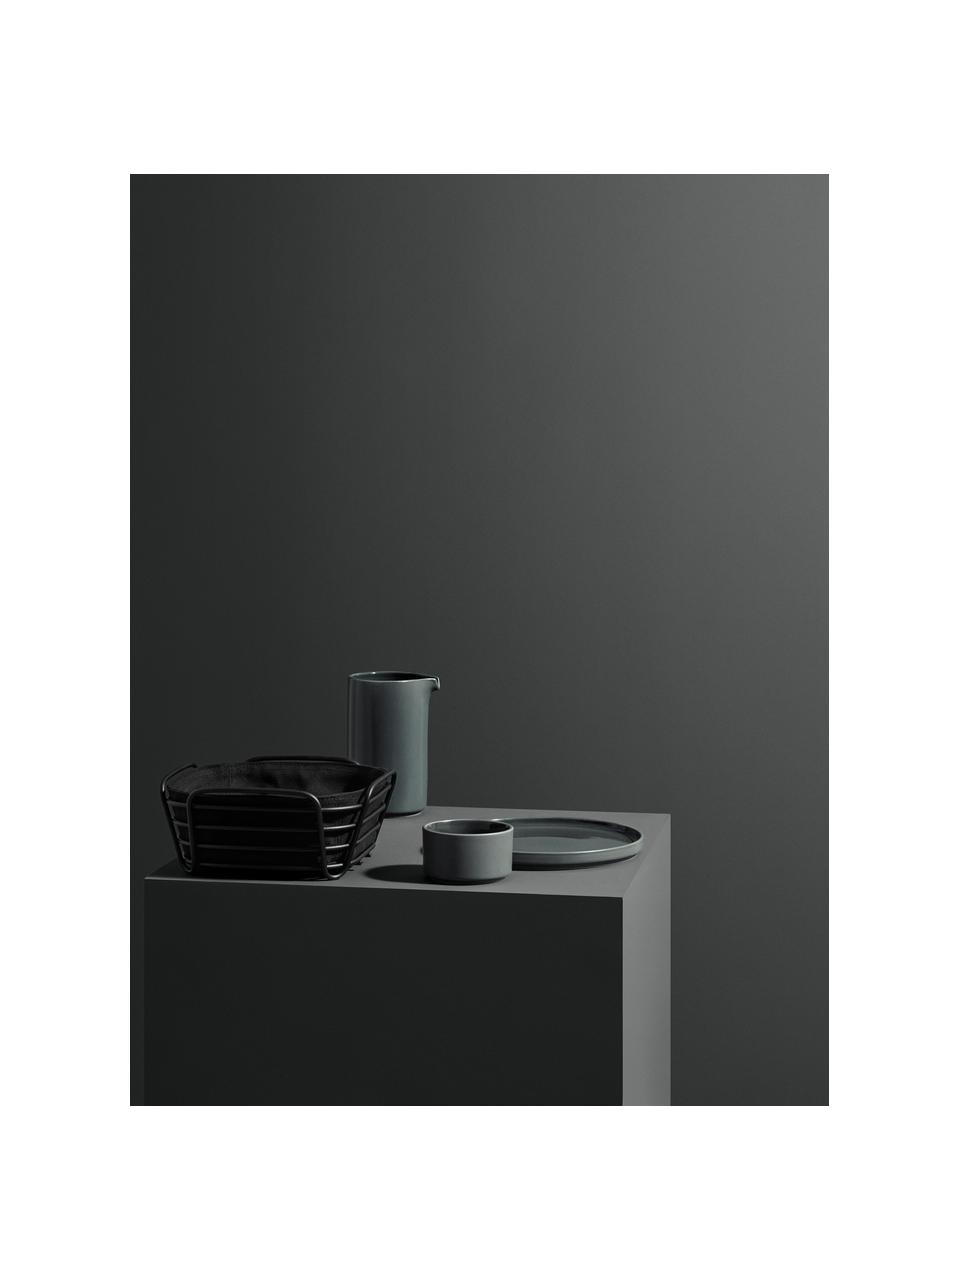 Brotkorb Delara mit herausnehmbarem Einsatz, Korb: Stahl, Grau, Silberfarben, 26 x 9 cm